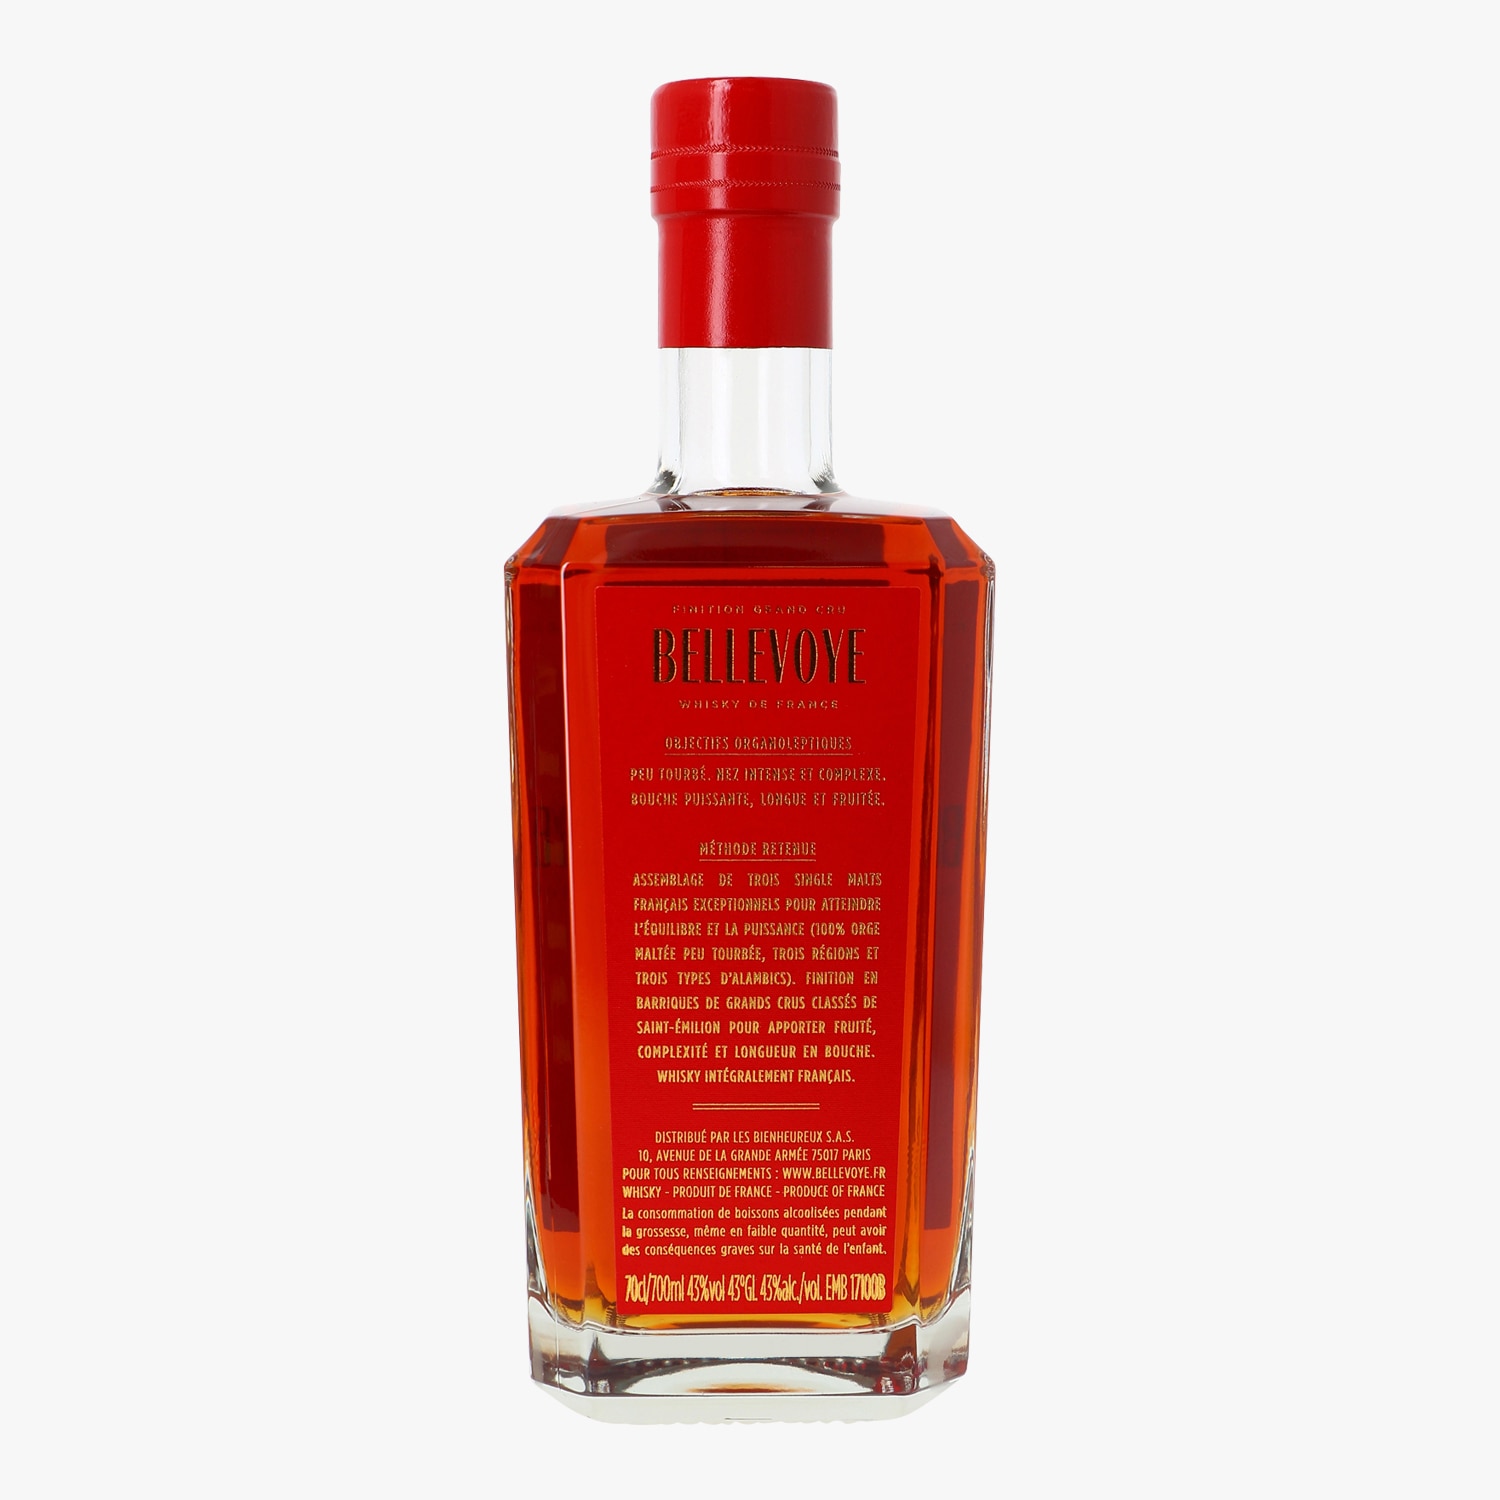 Whisky Bellevoye Rouge en vente au meilleur prix !